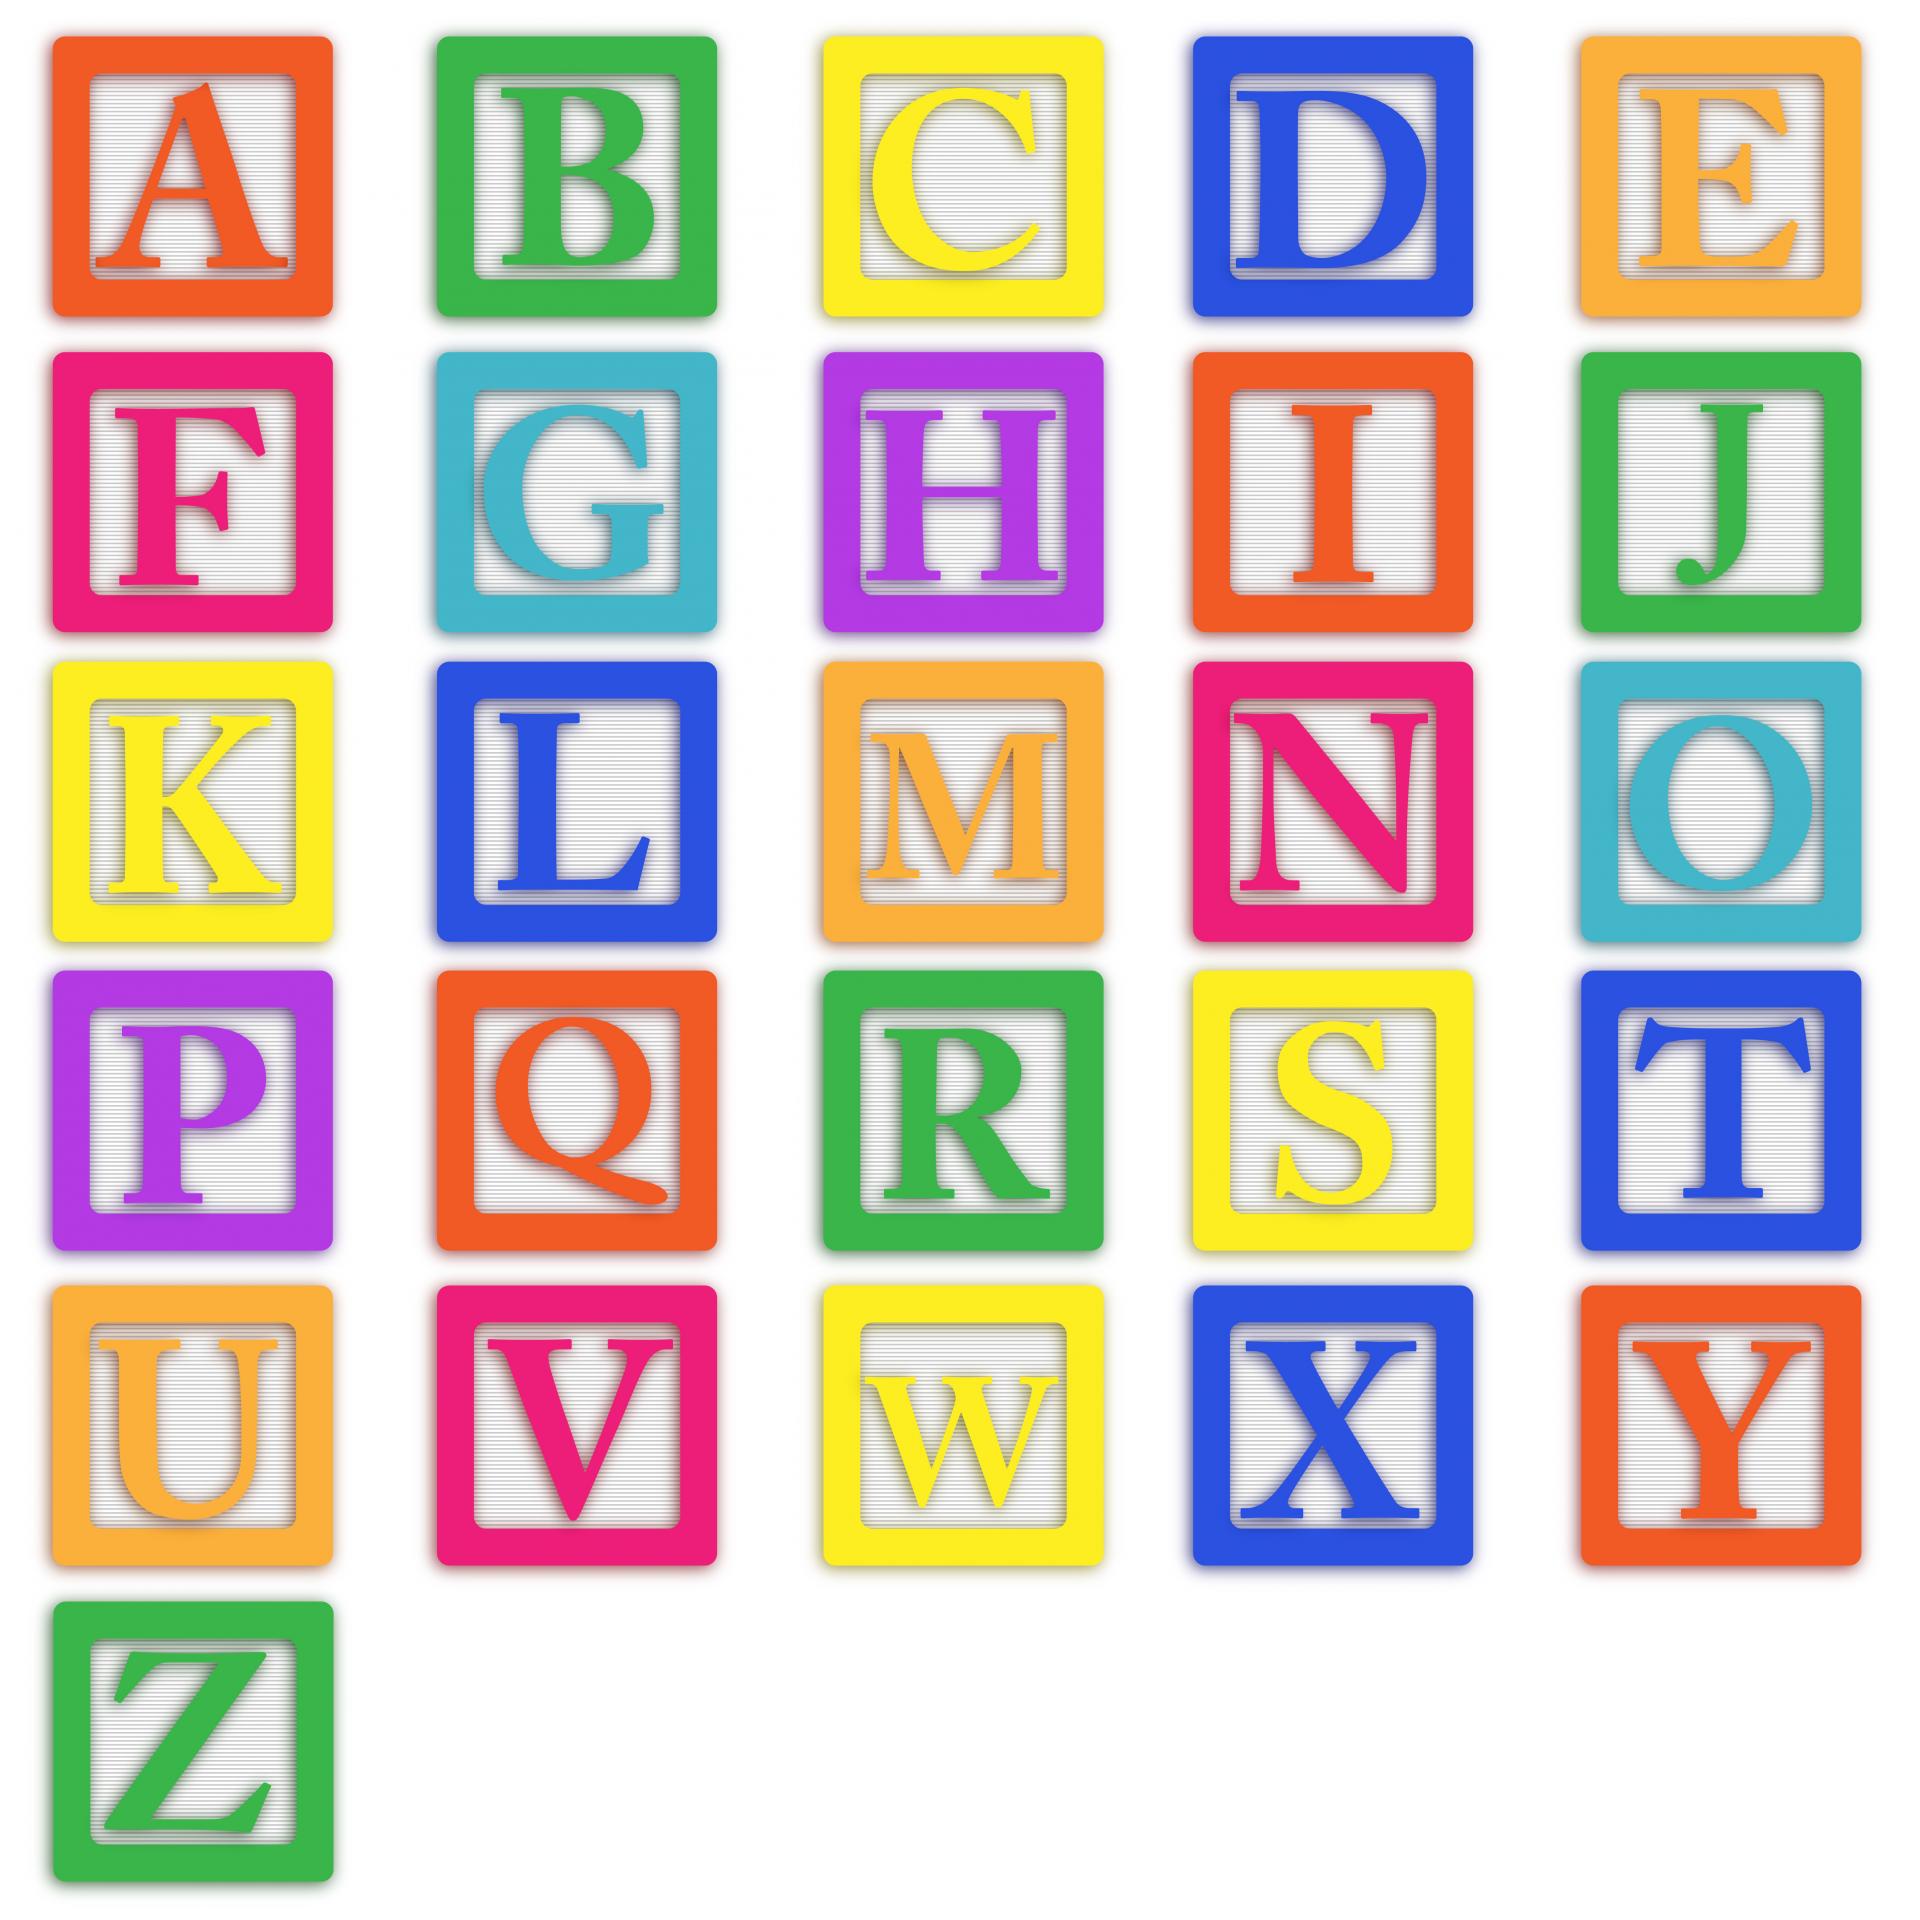 free clipart of alphabet blocks - photo #27